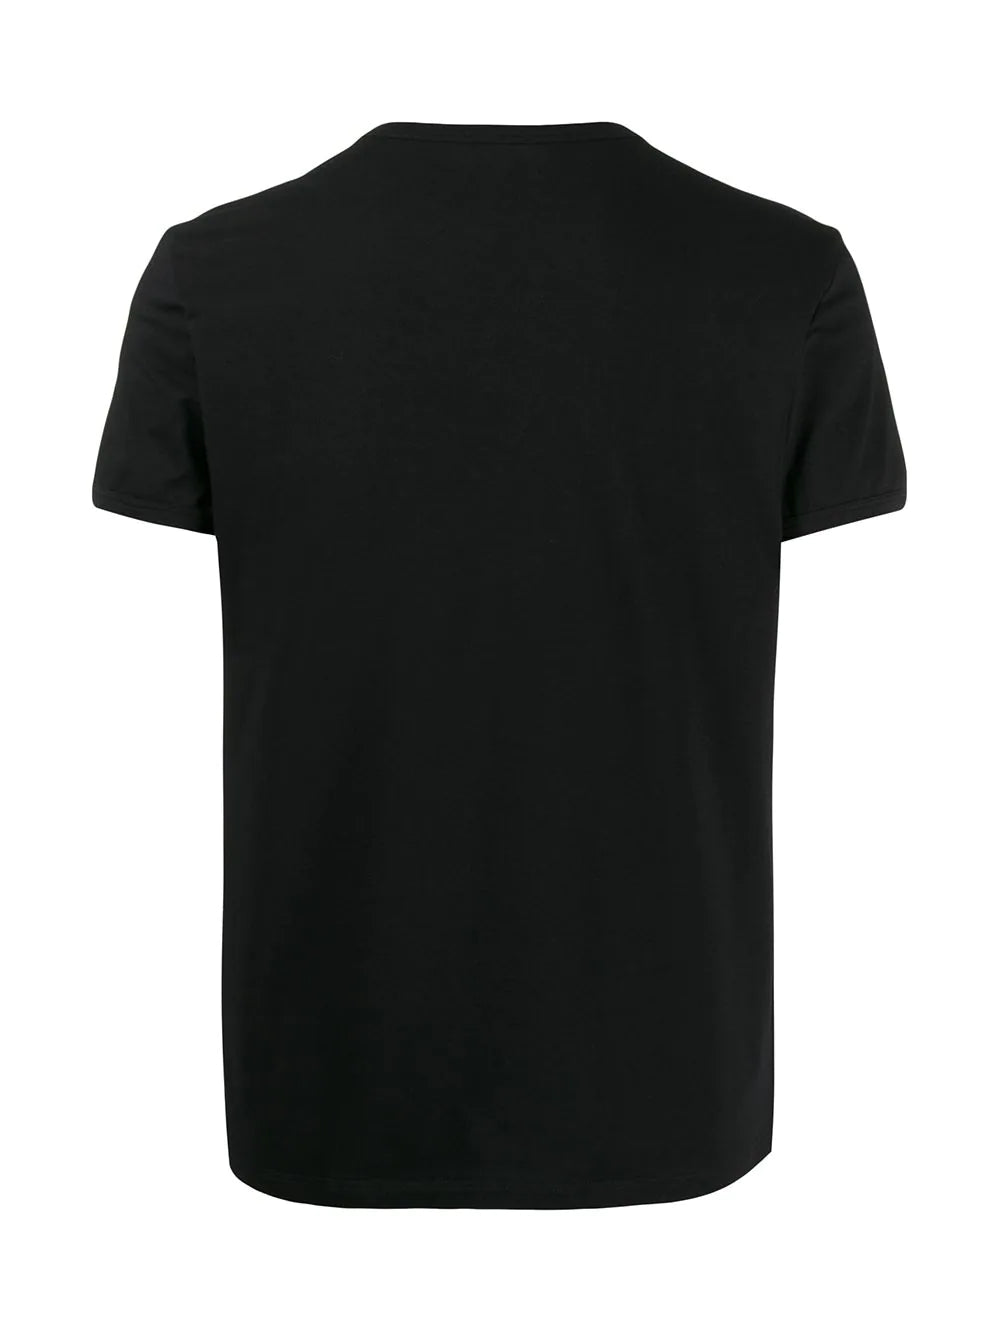 Versace Black V-Neck T-shirt